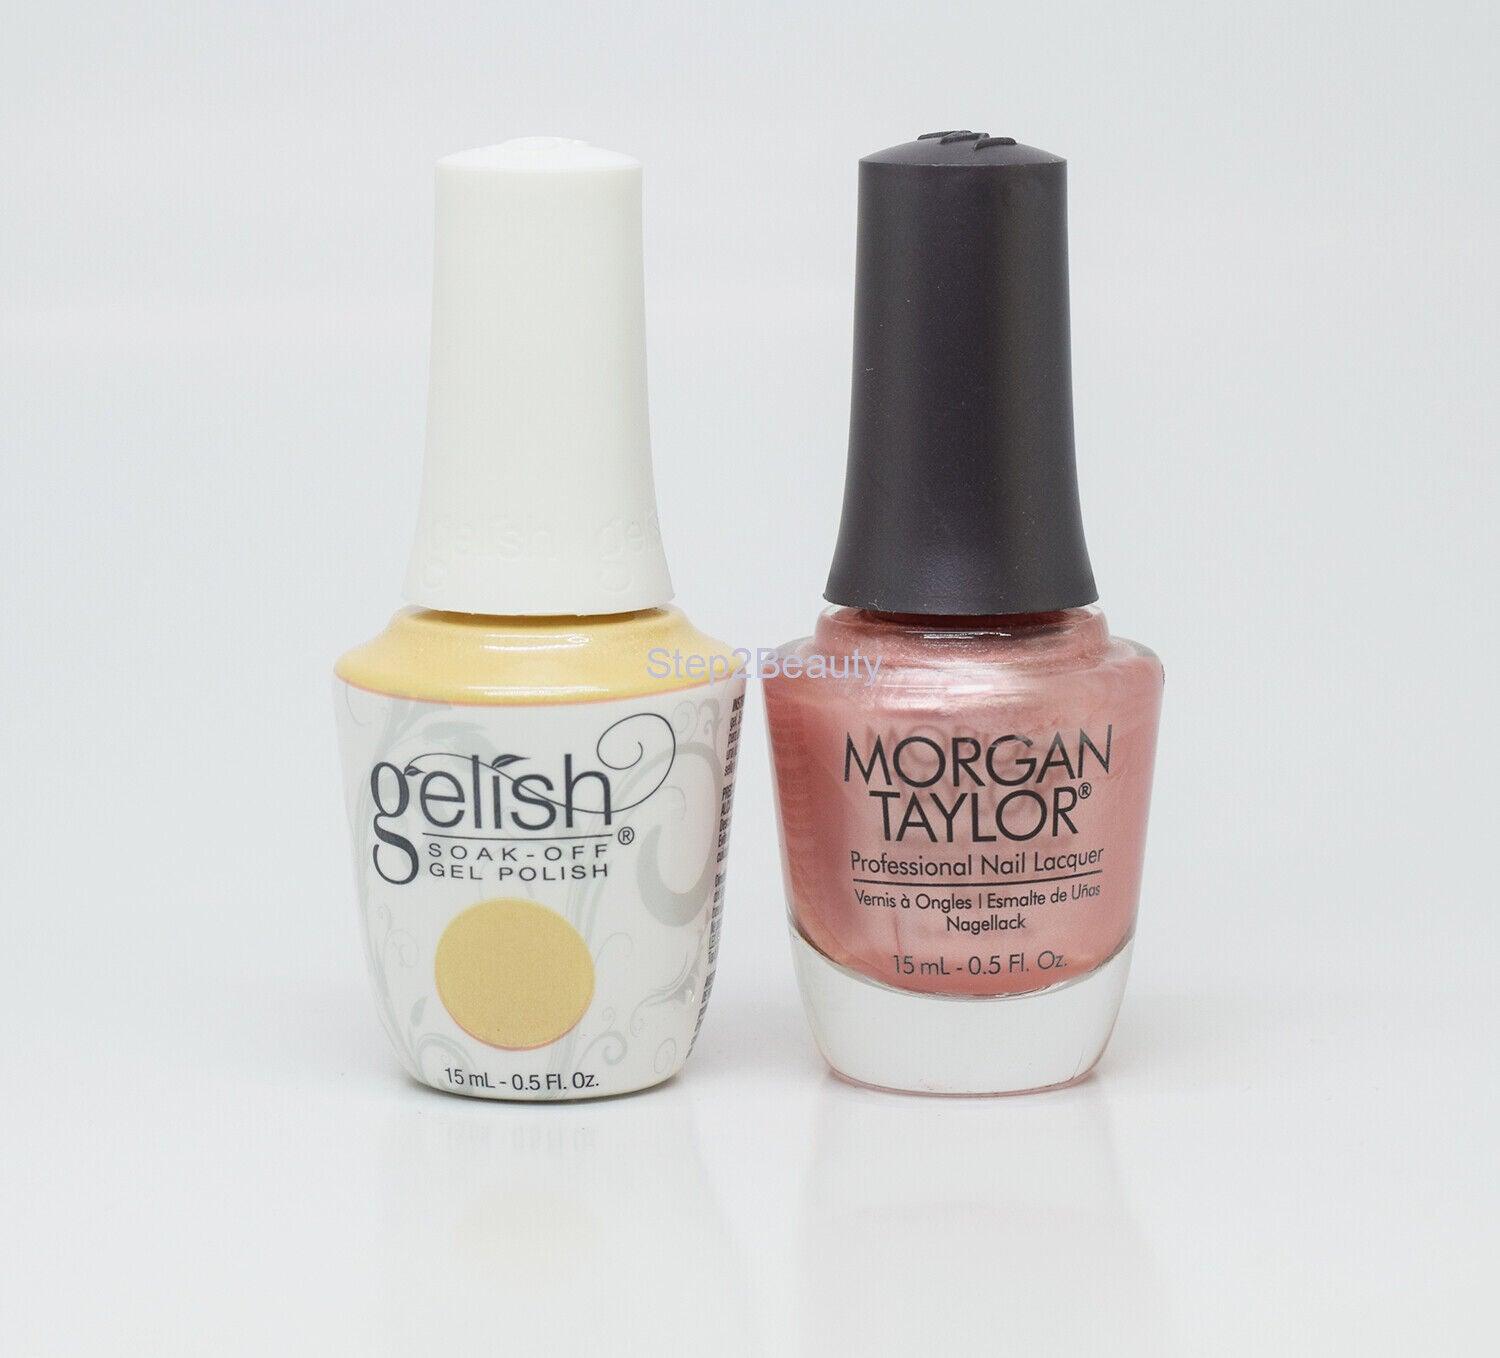 Gelish DUO Soak Off Gel Polish + Morgan Taylor Nail Lacquer - #840 Taffeta